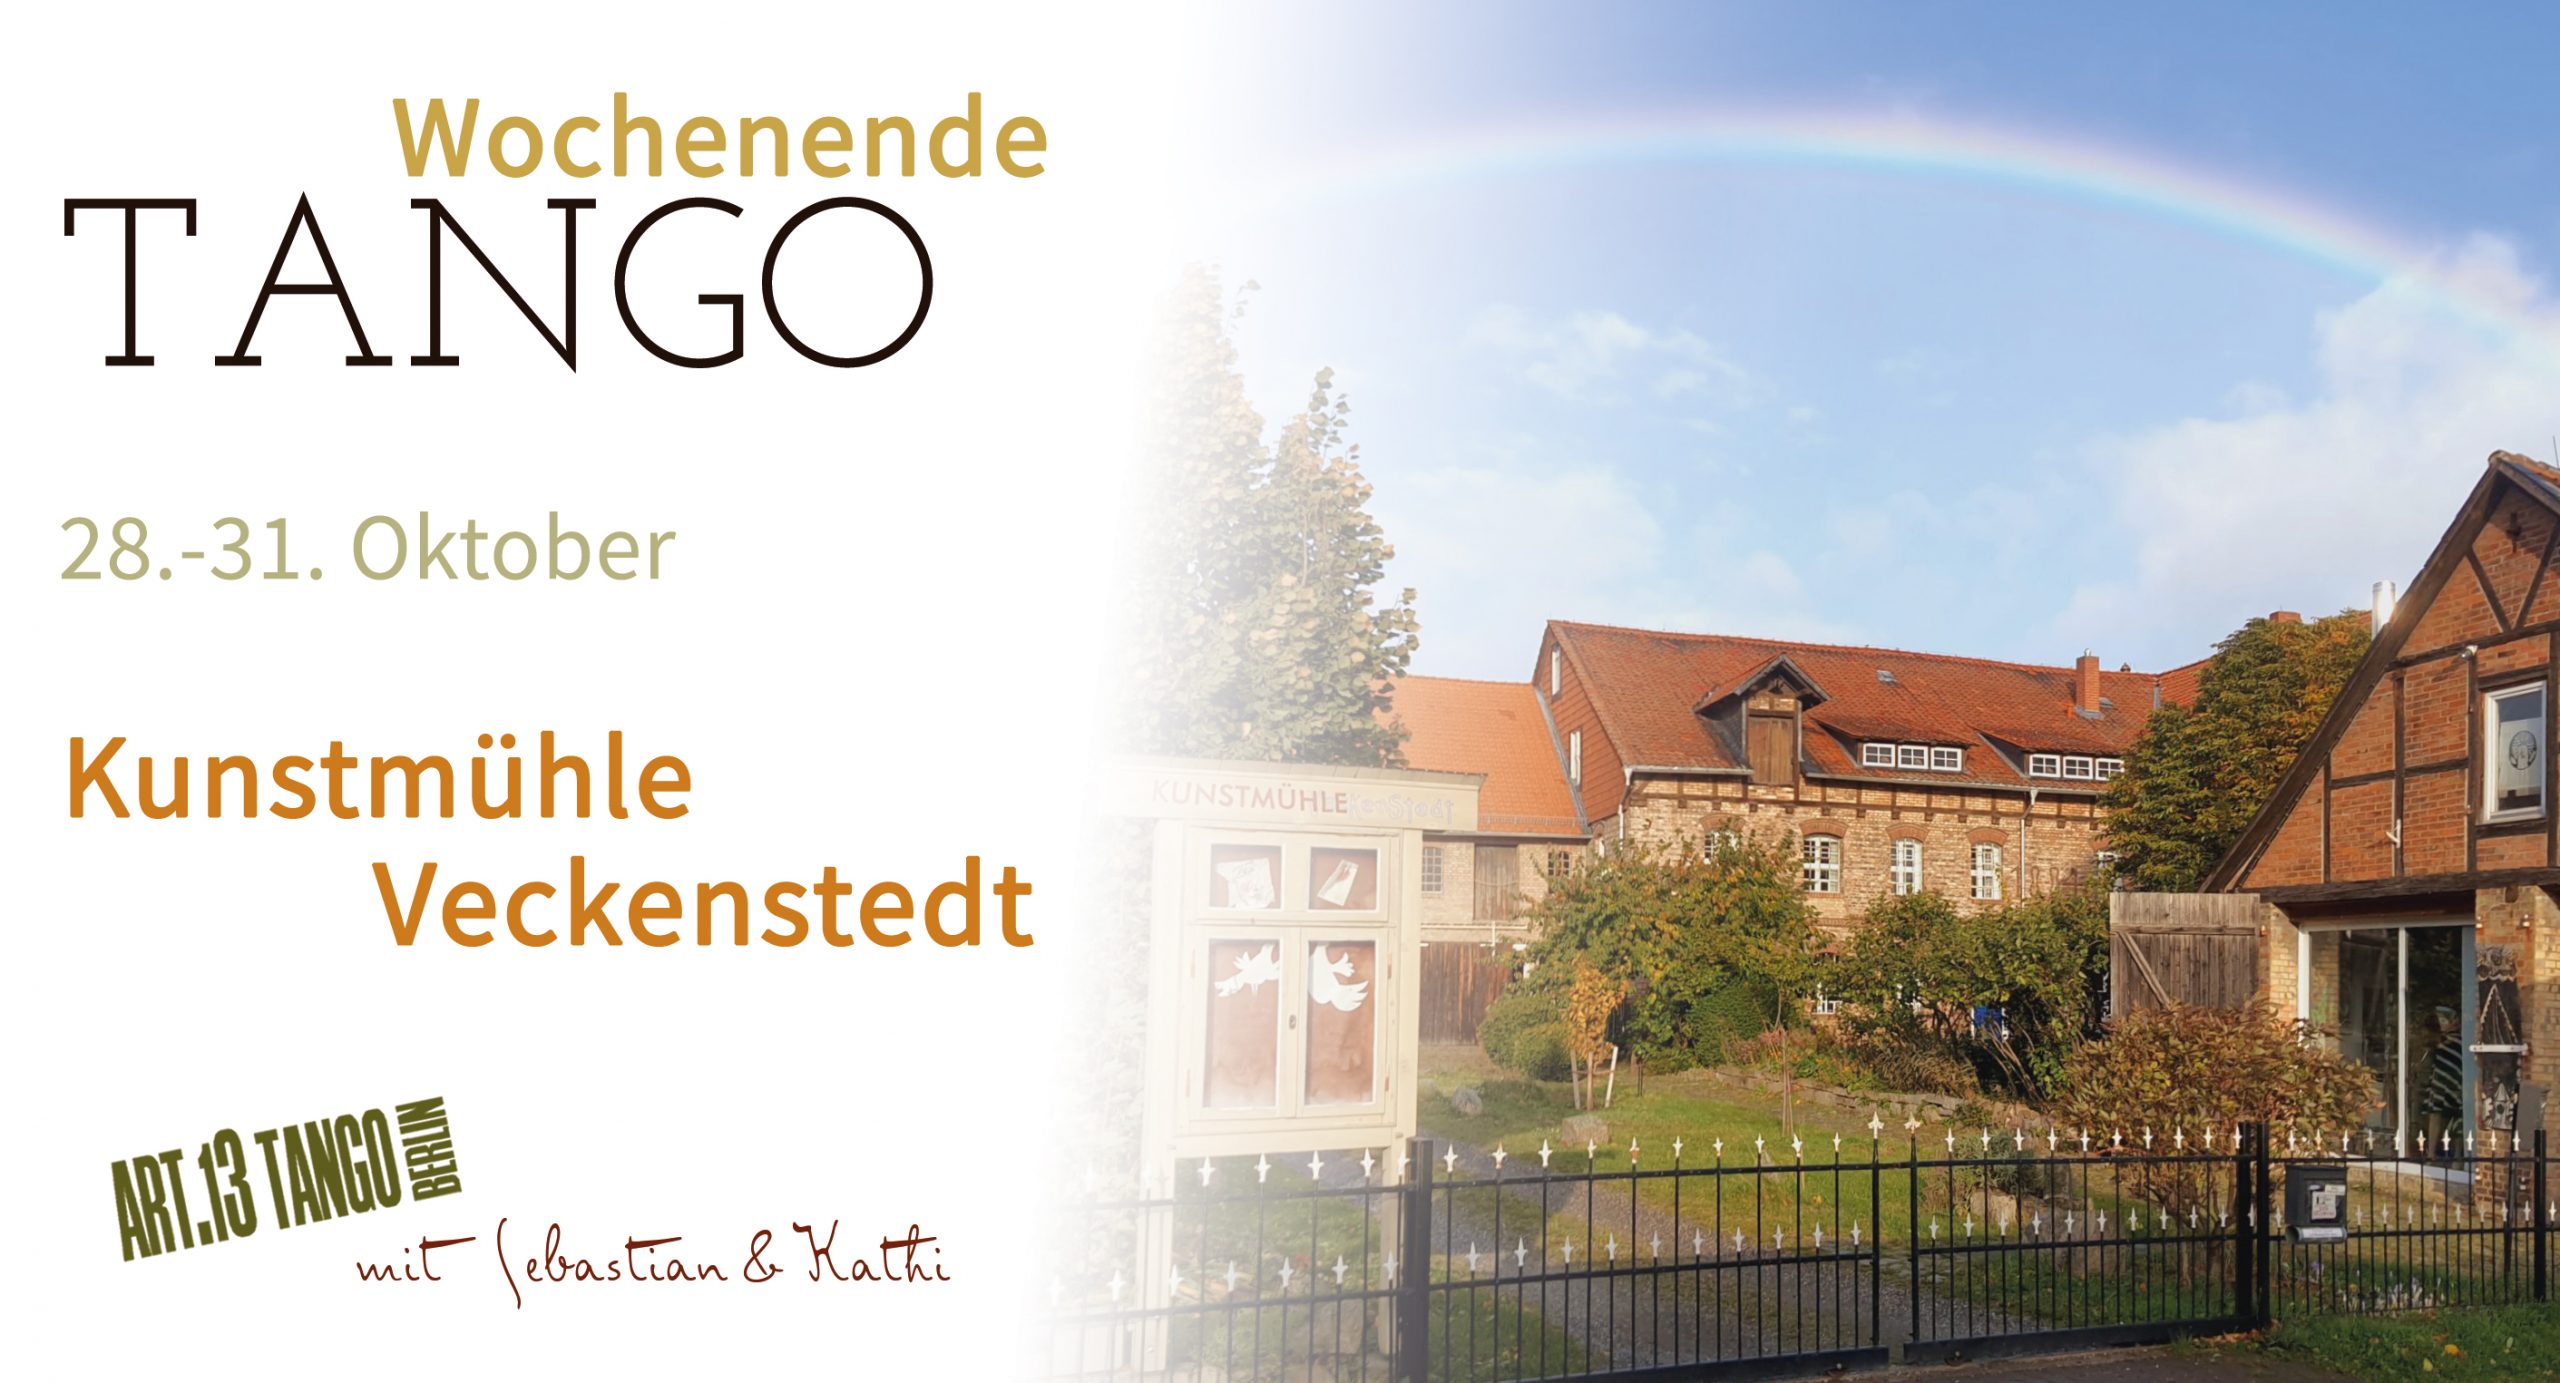 Langes Tangowochenende Kunstmühle Veckenstedt im Oktober | mit Sebastian & Kathi